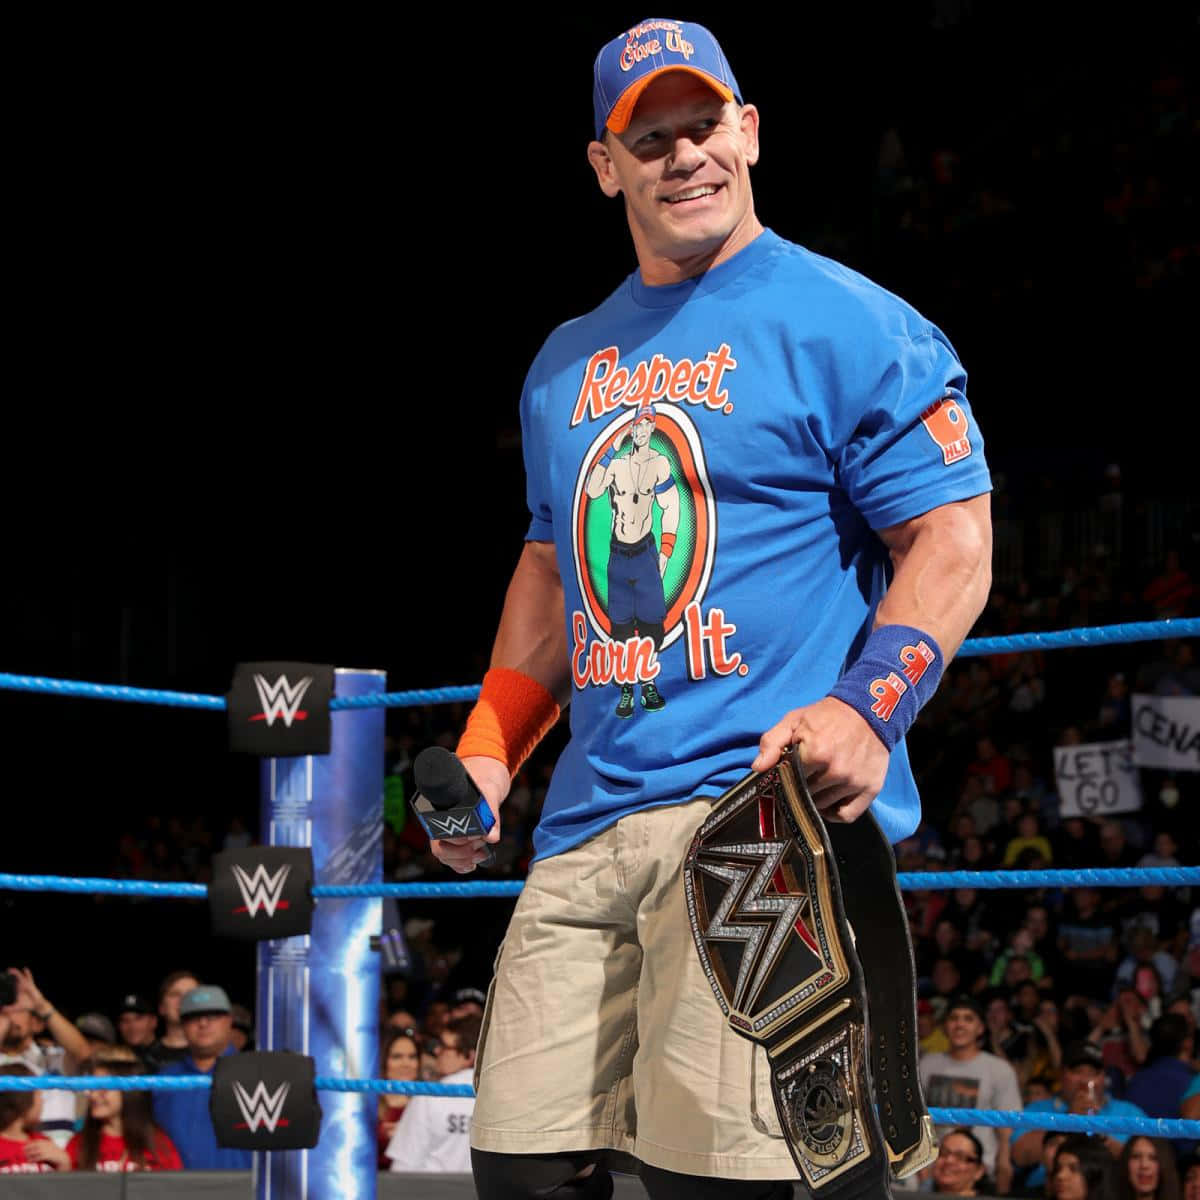 John Cena showcasing his trademark pose in the ring